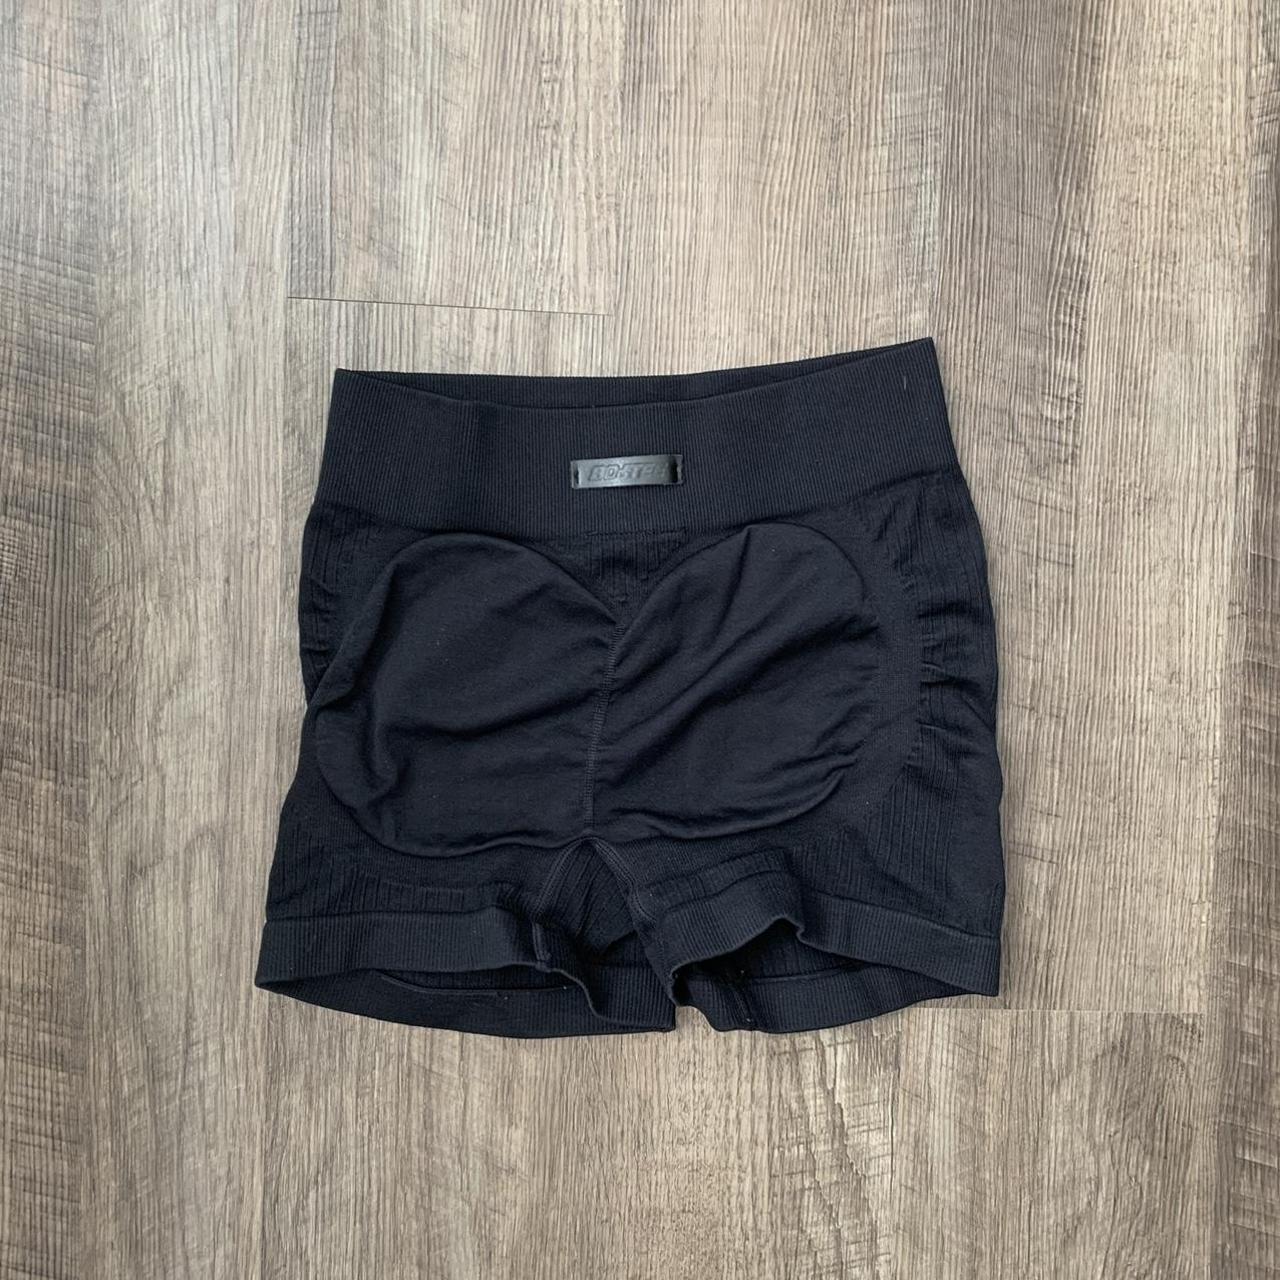 Bo+Tee black shorts - Depop